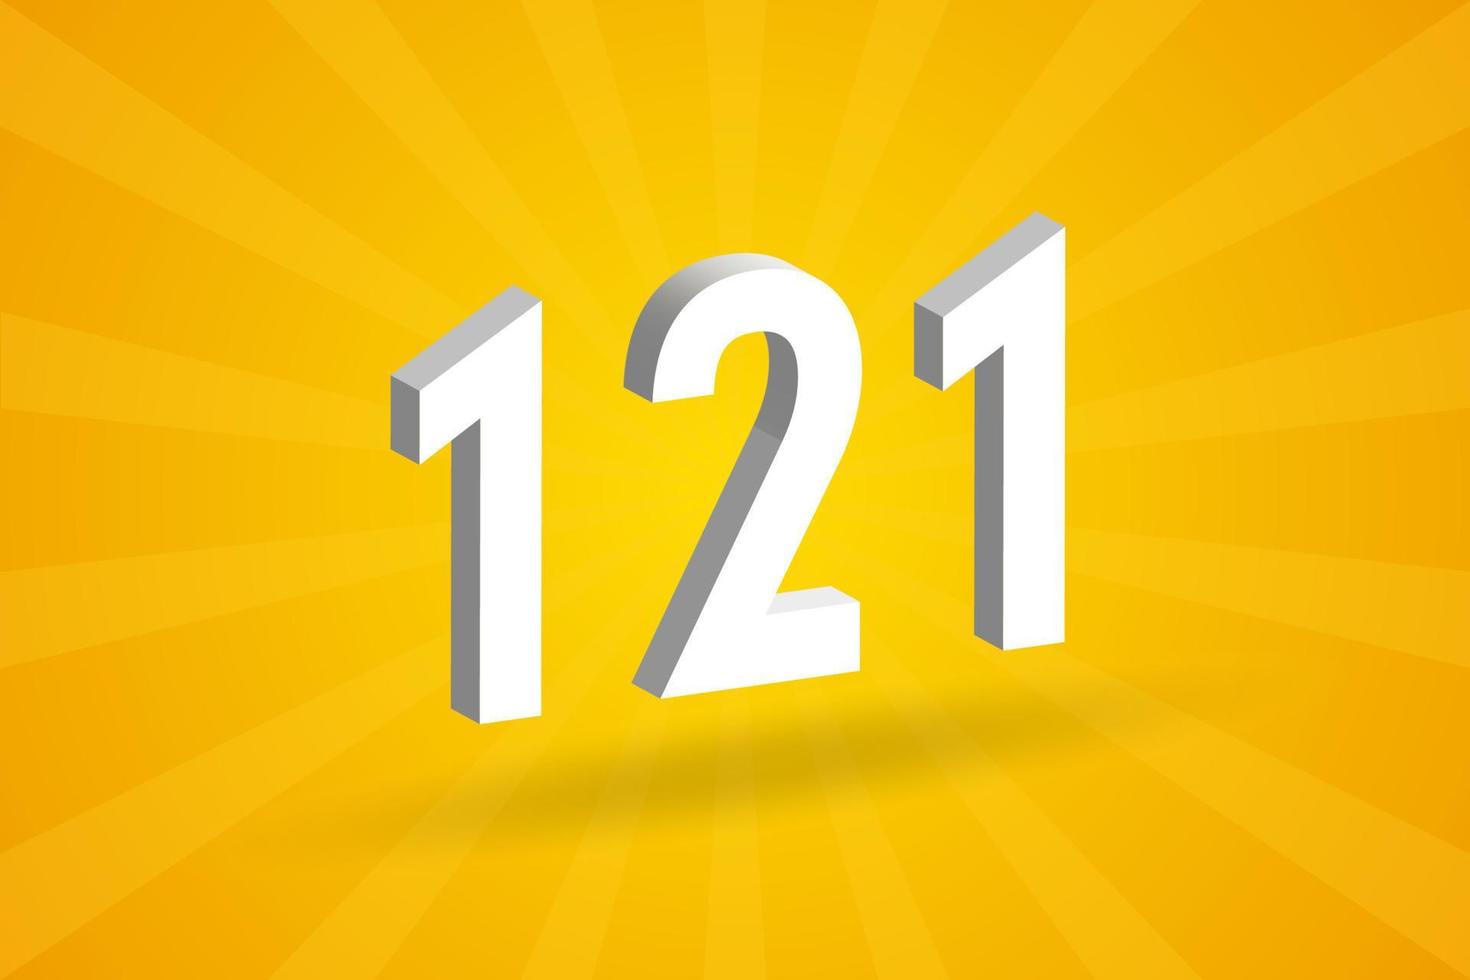 3d 121 siffra font alfabet. vit 3d siffra 121 med gul bakgrund vektor